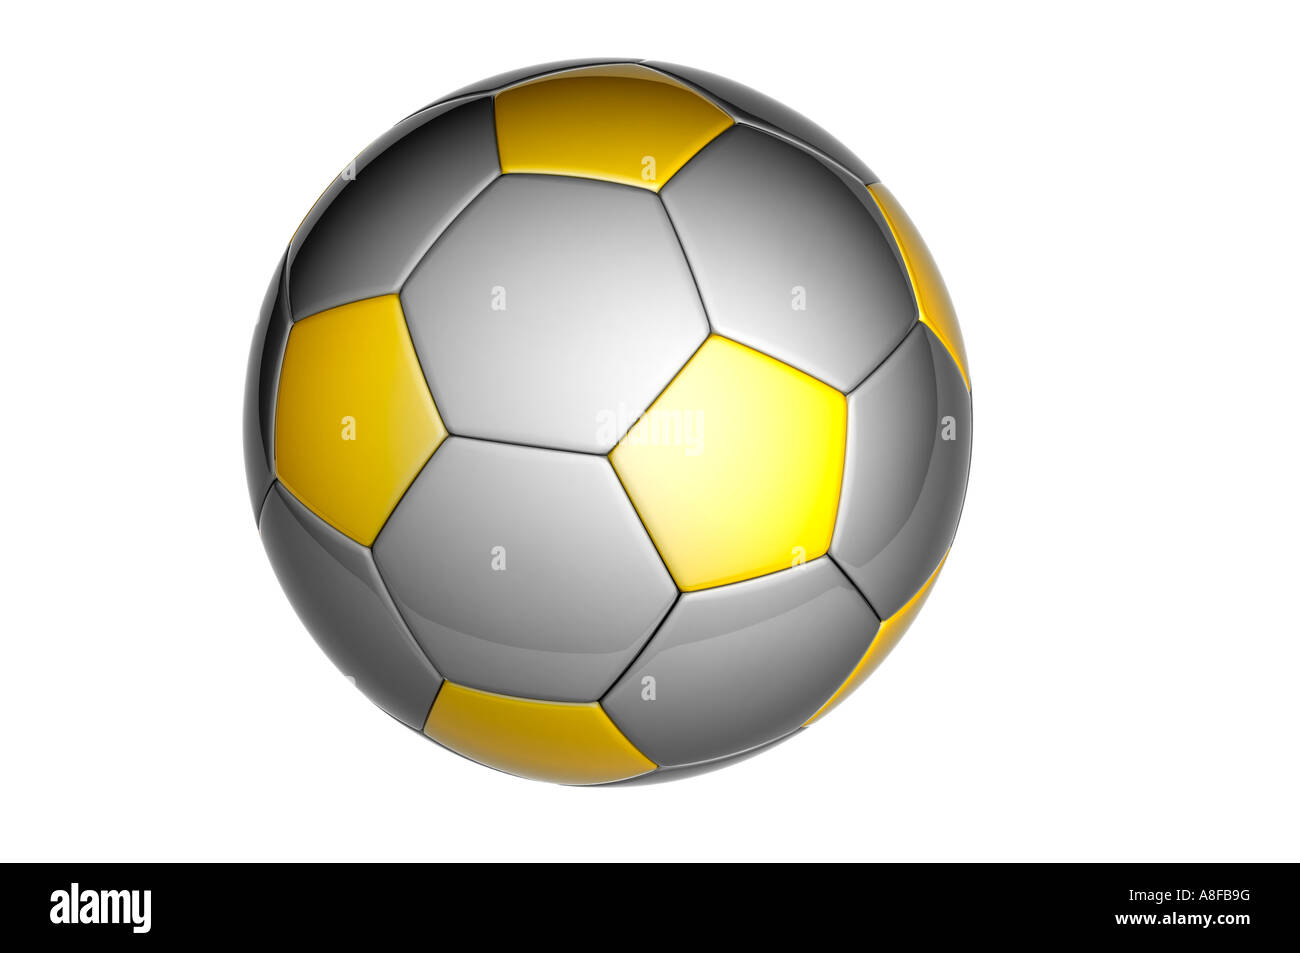 Fußball- oder Fußball ball Stockfoto